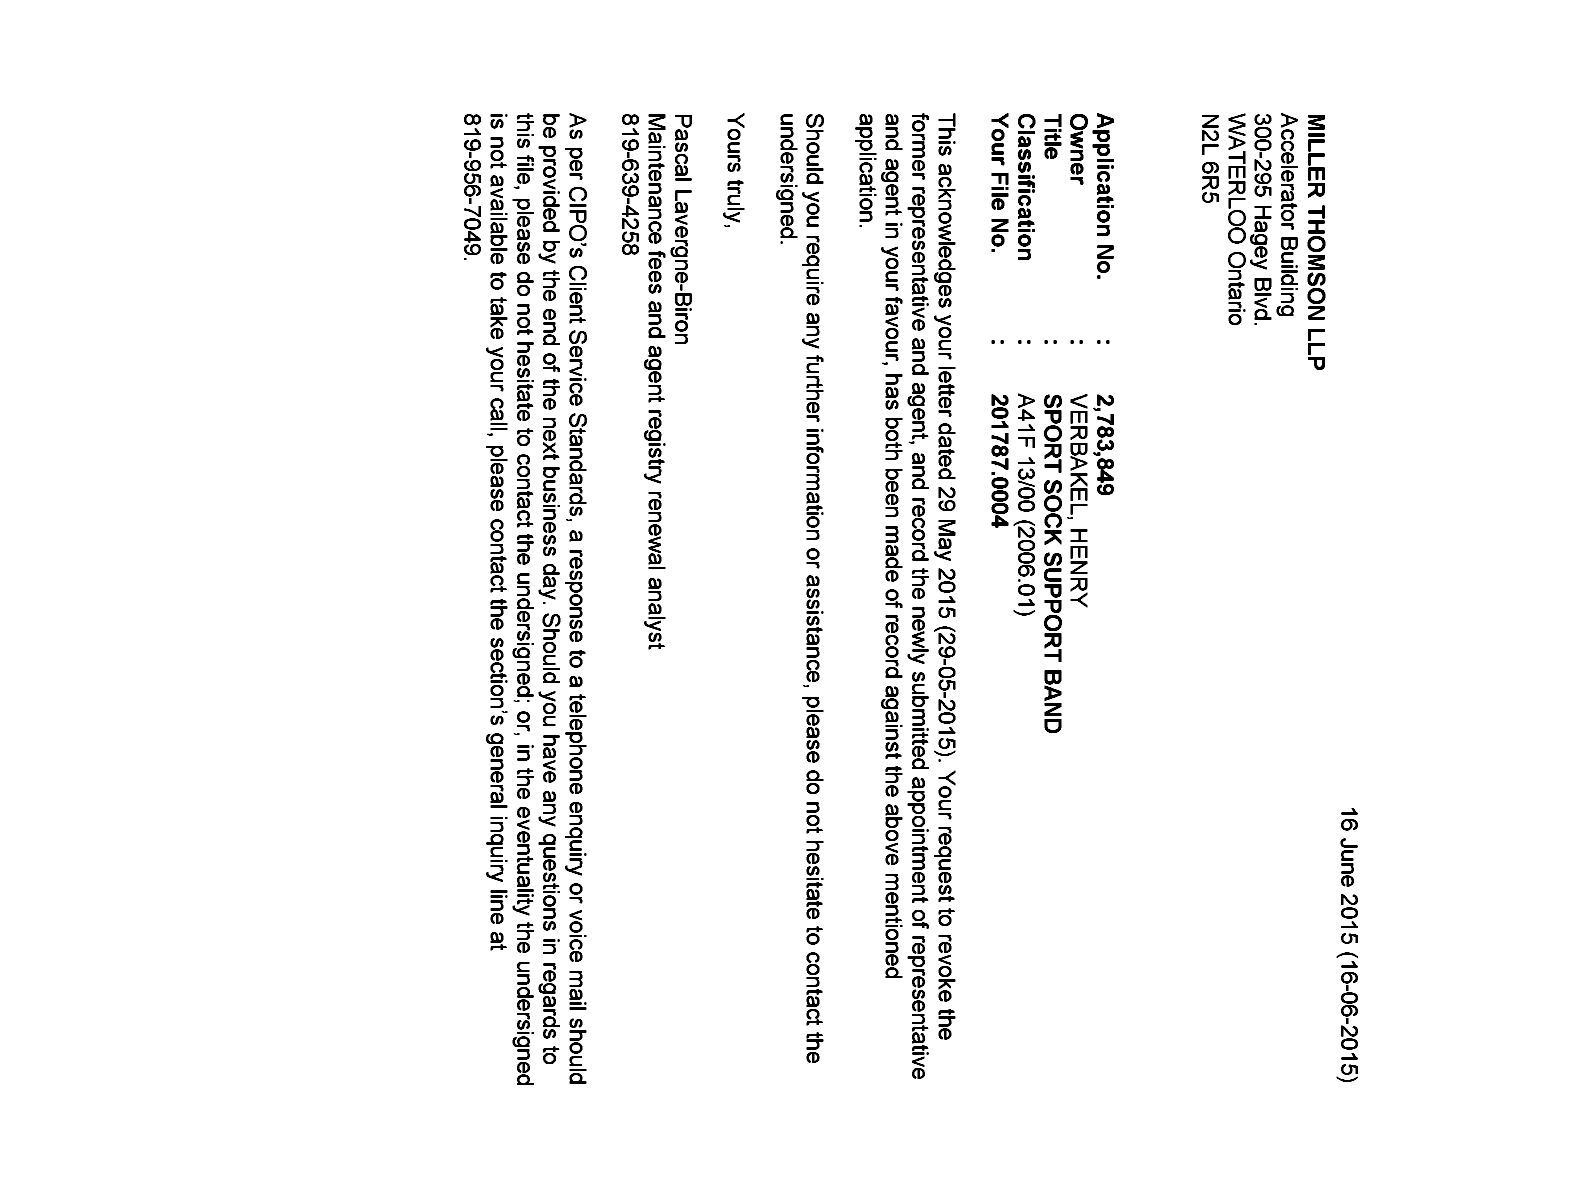 Canadian Patent Document 2783849. Correspondence 20141216. Image 1 of 1